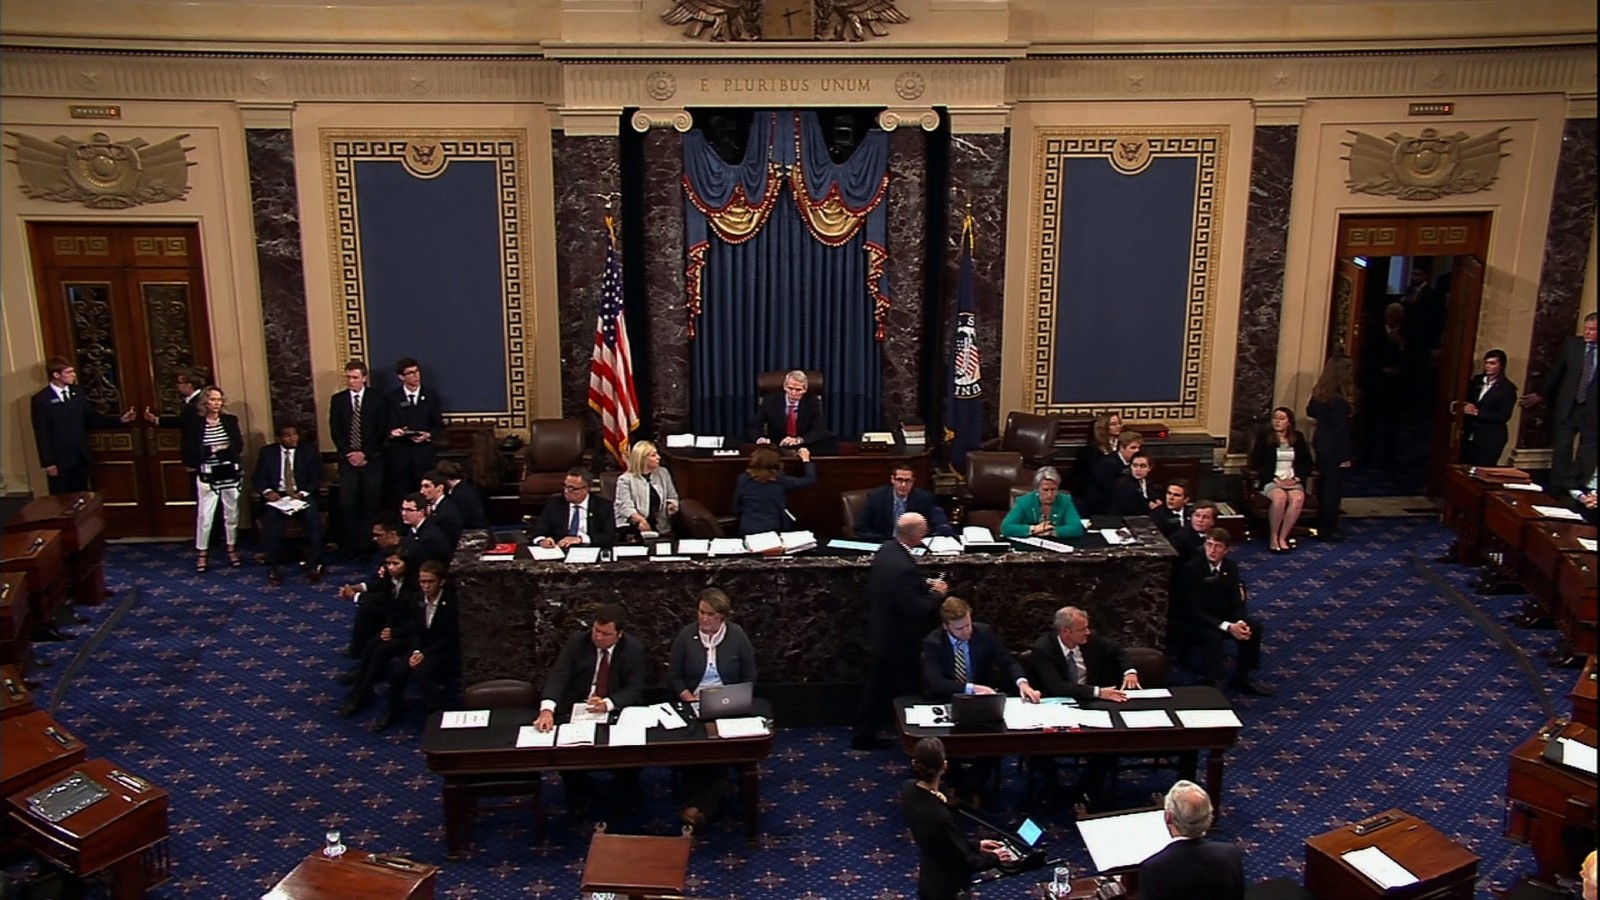 Protesters Disrupt Senate Floor Cnn Video